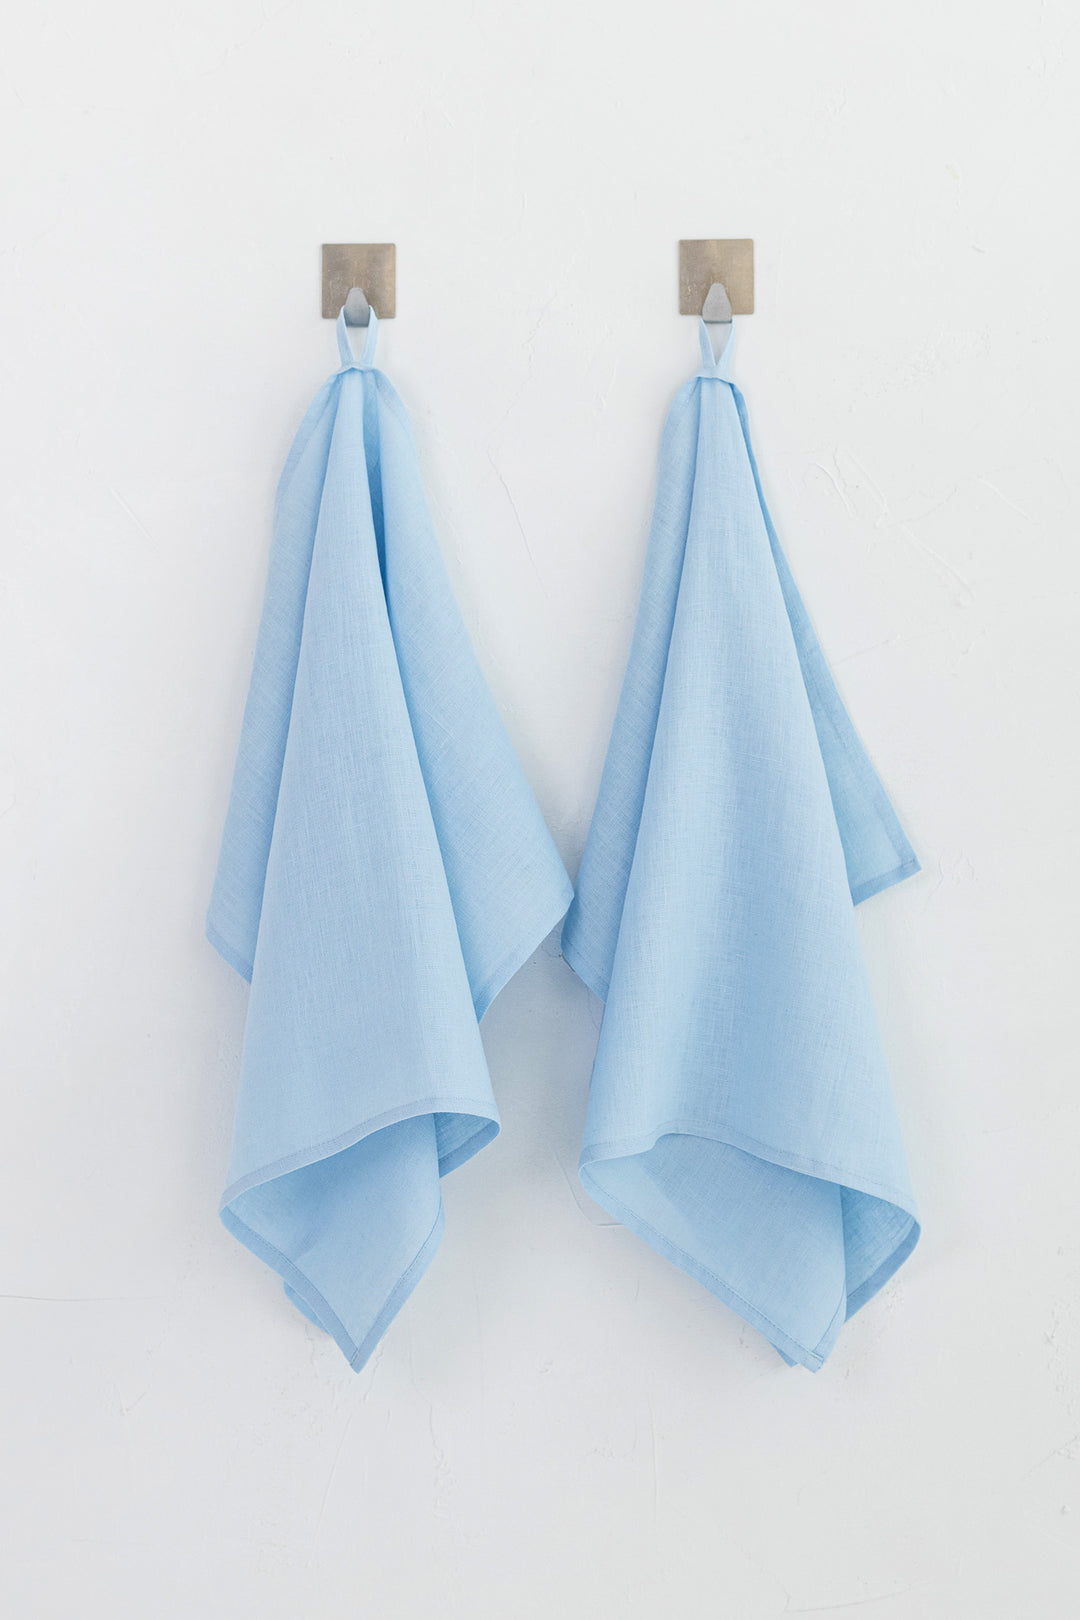 Set Of 2 Hanging Linen Tea Towels In Sky Blue Color - Daily Linen